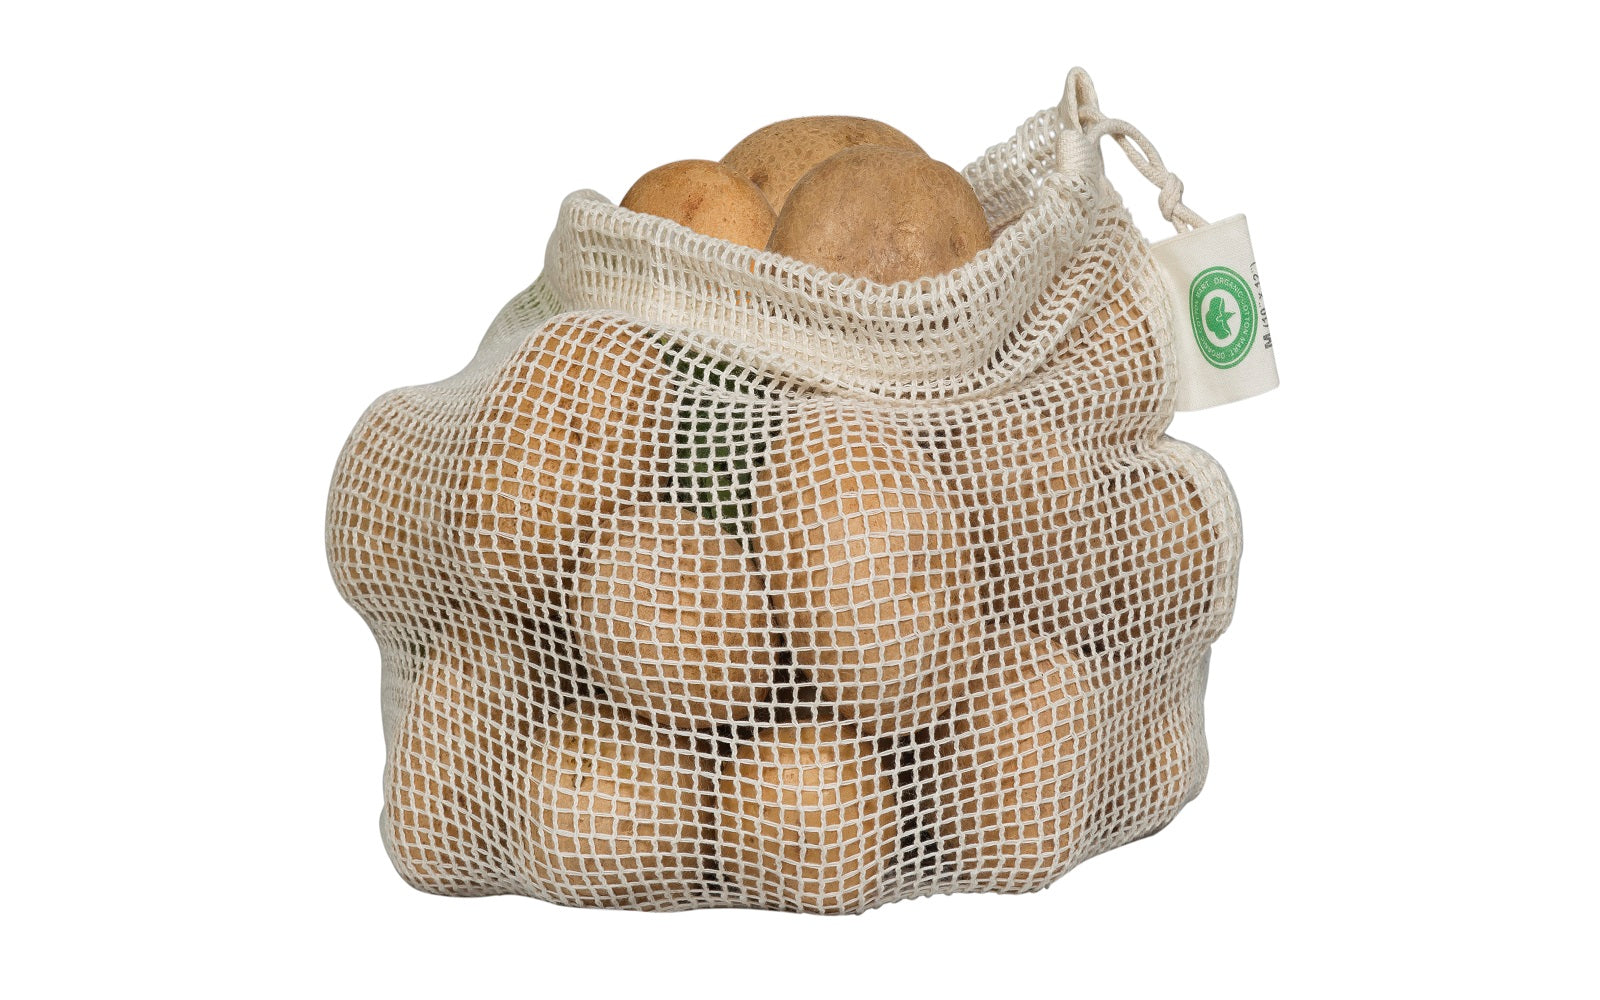 Reusable Shopping Mesh Net Bag Shop Grocery Tote Bag